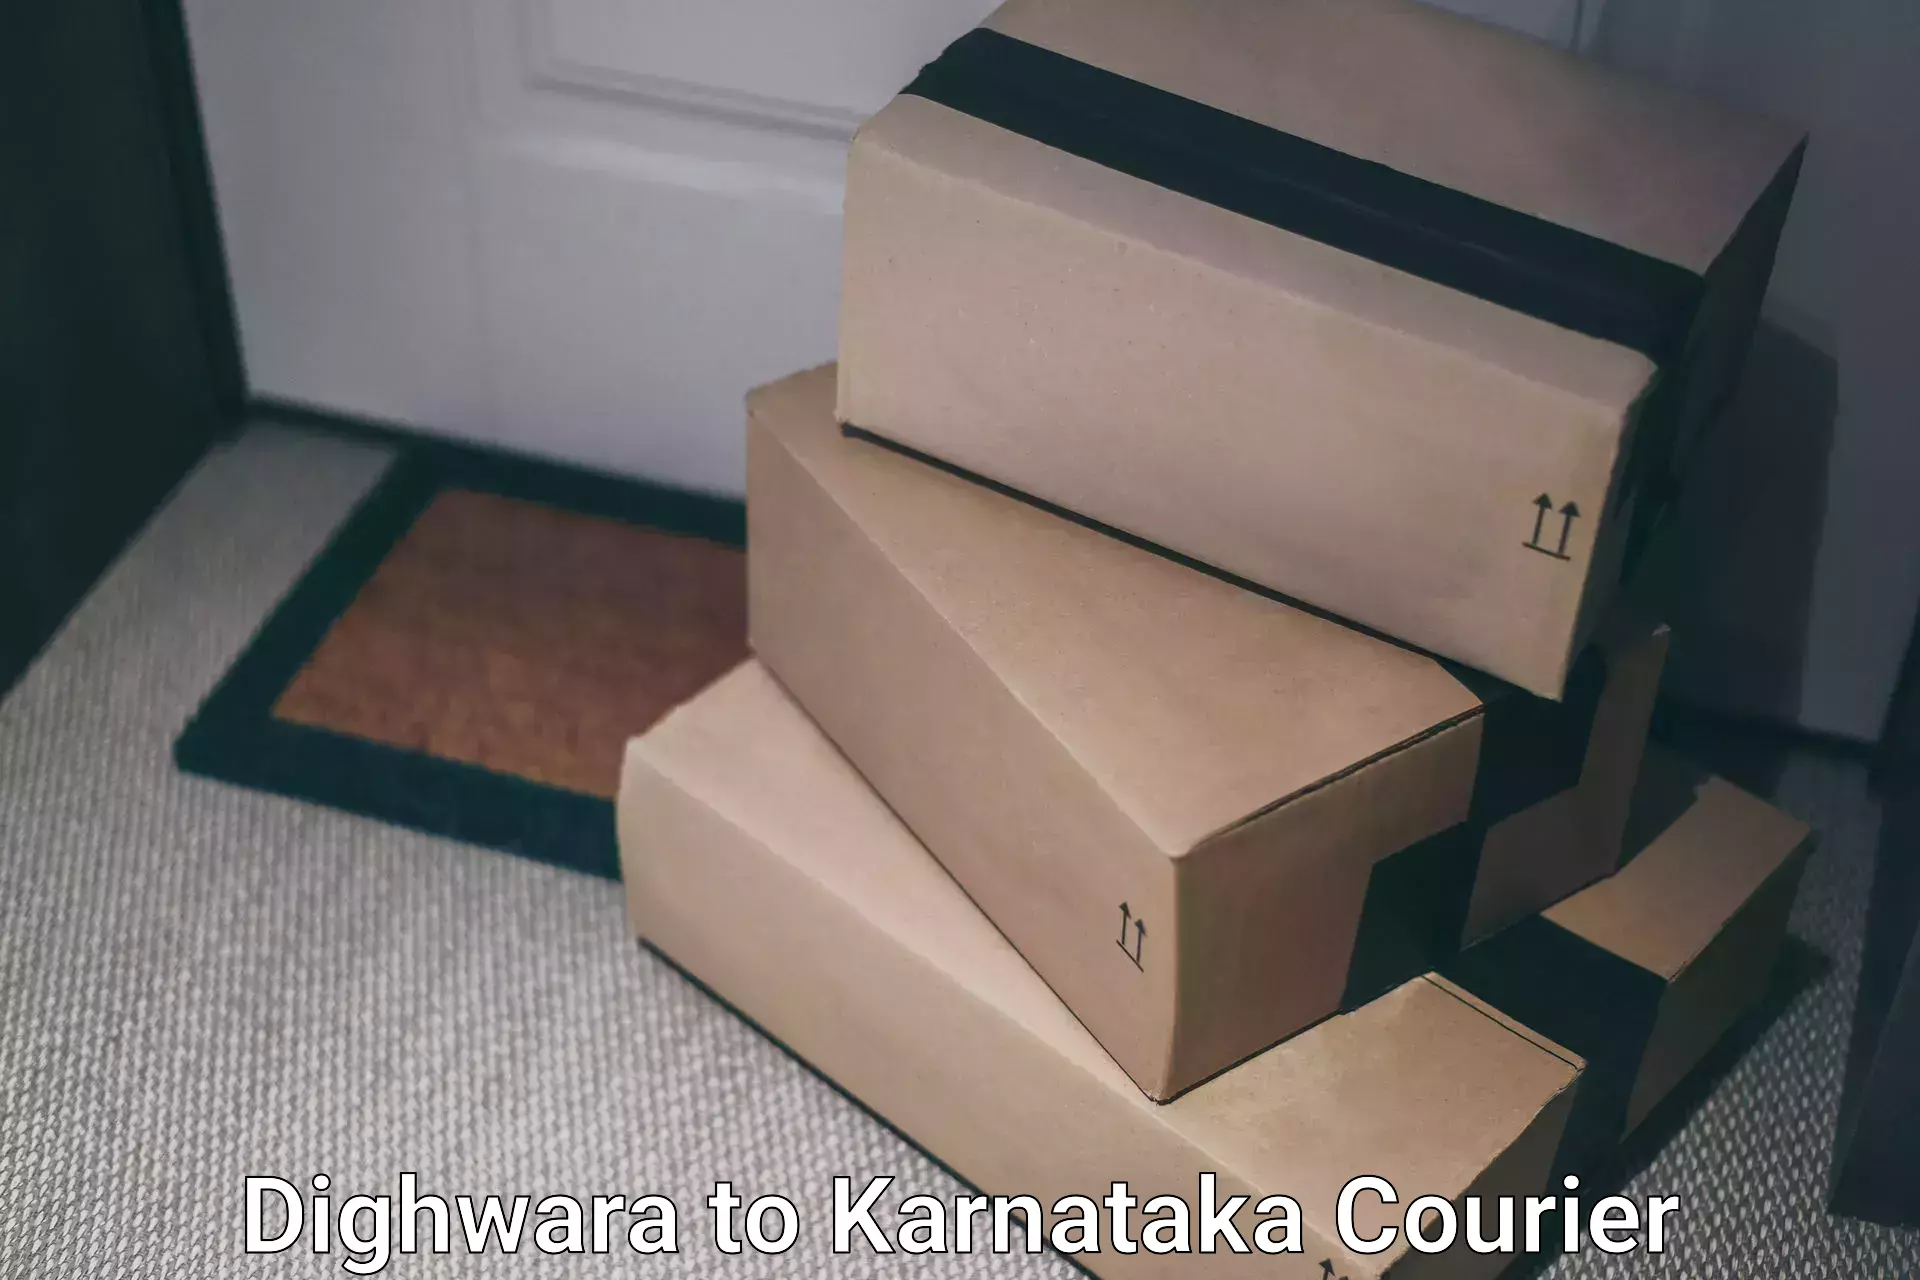 Courier service innovation Dighwara to Mysore